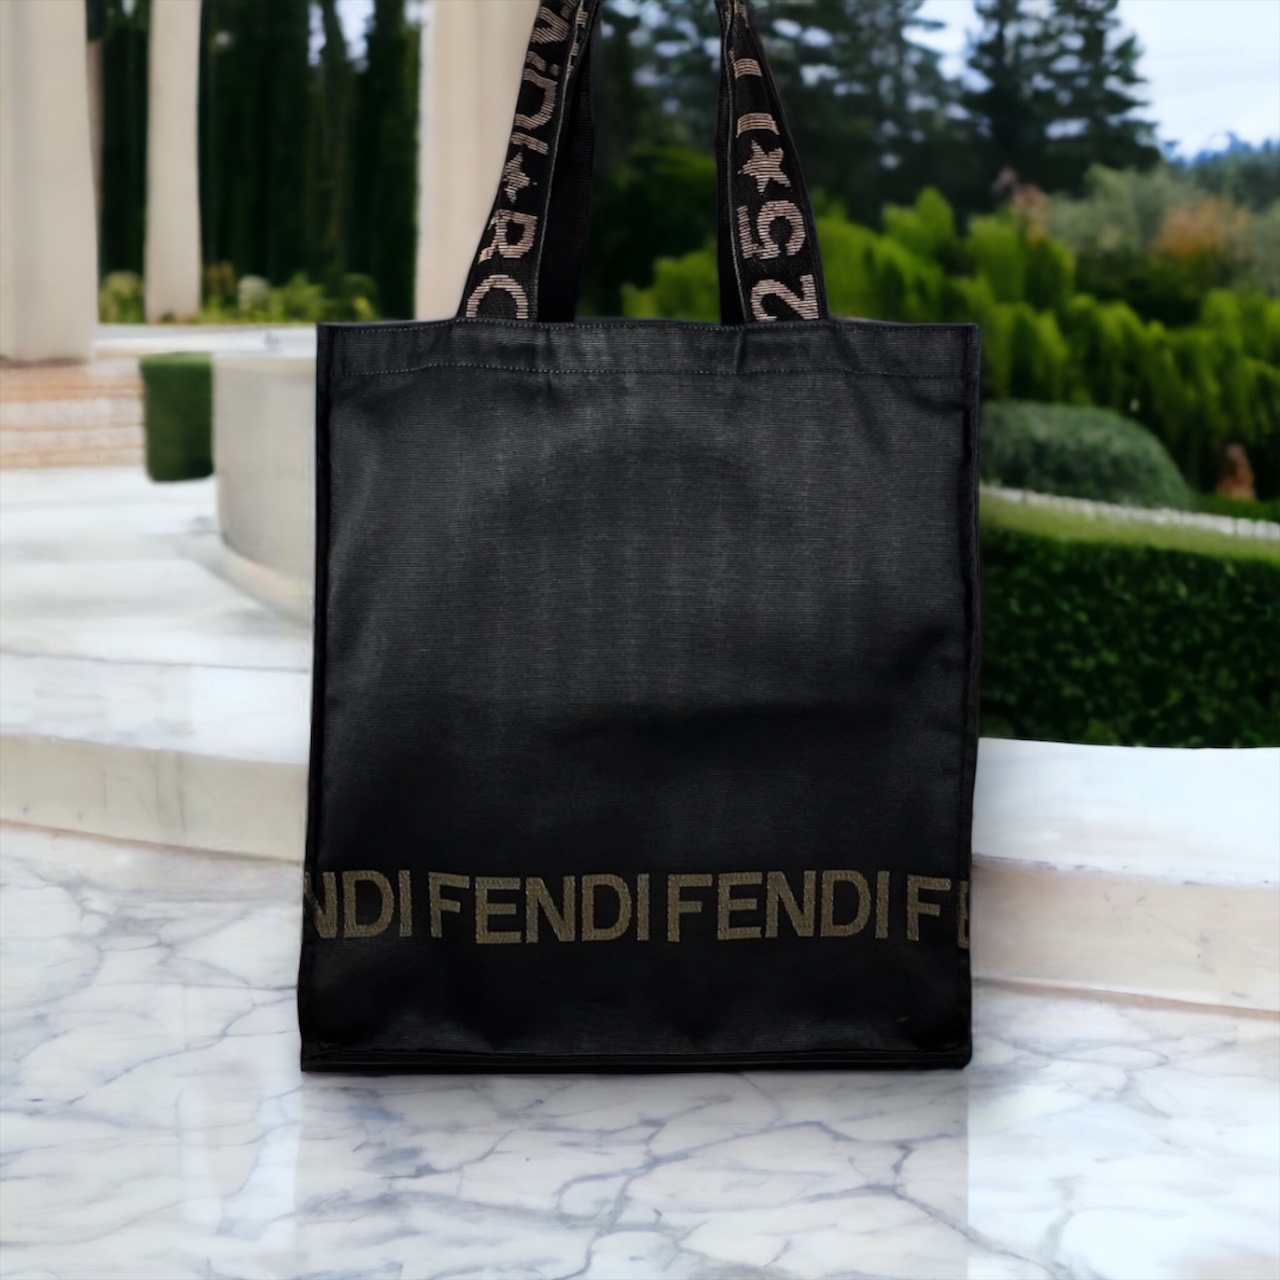 Vintage Fendi Bags Handbags & Totes